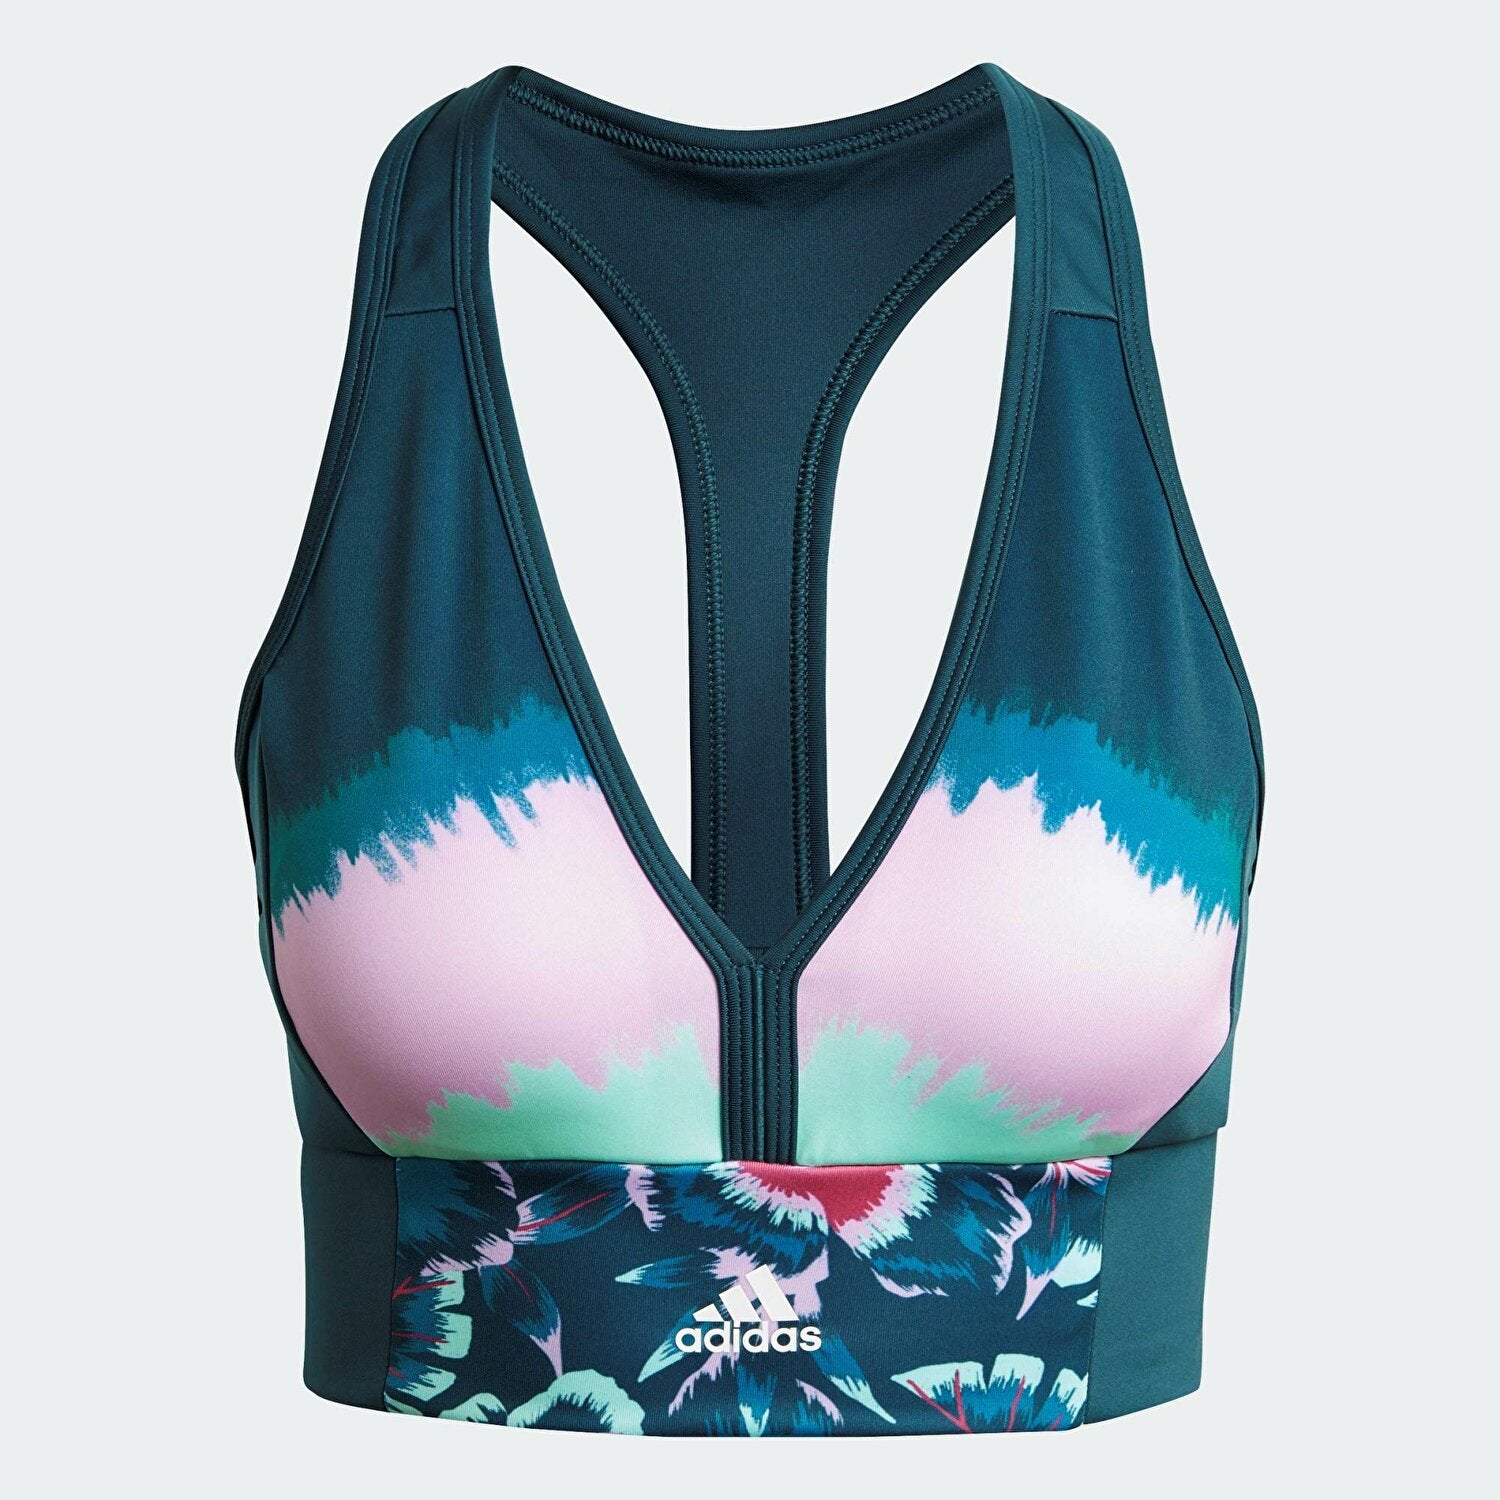 Adidas x Farm Rio women’s sports bra